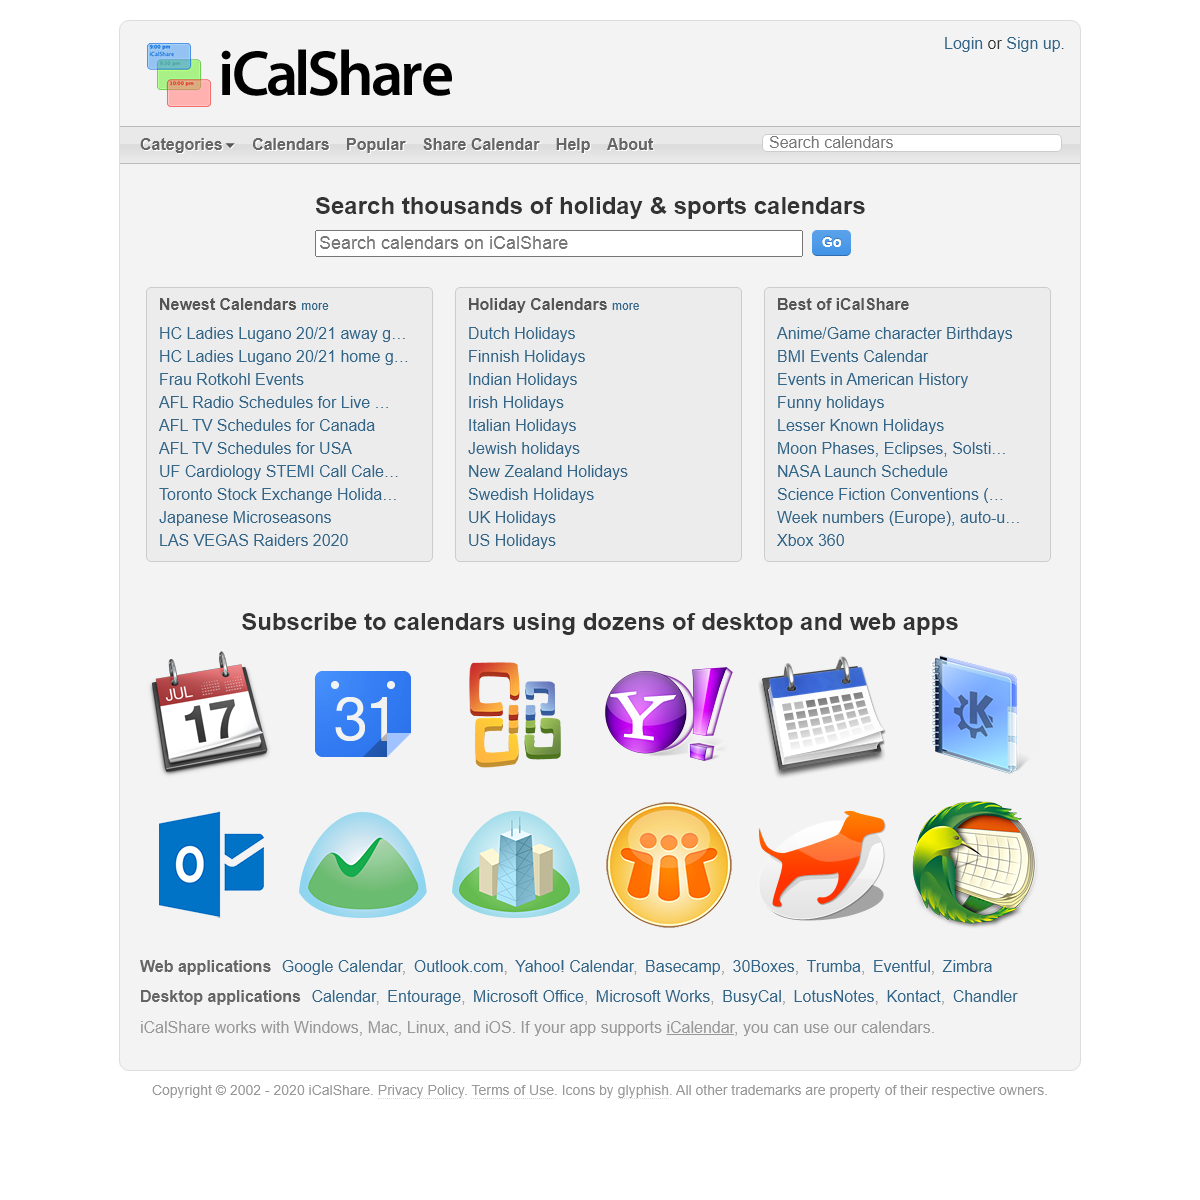 A complete backup of icalshare.com